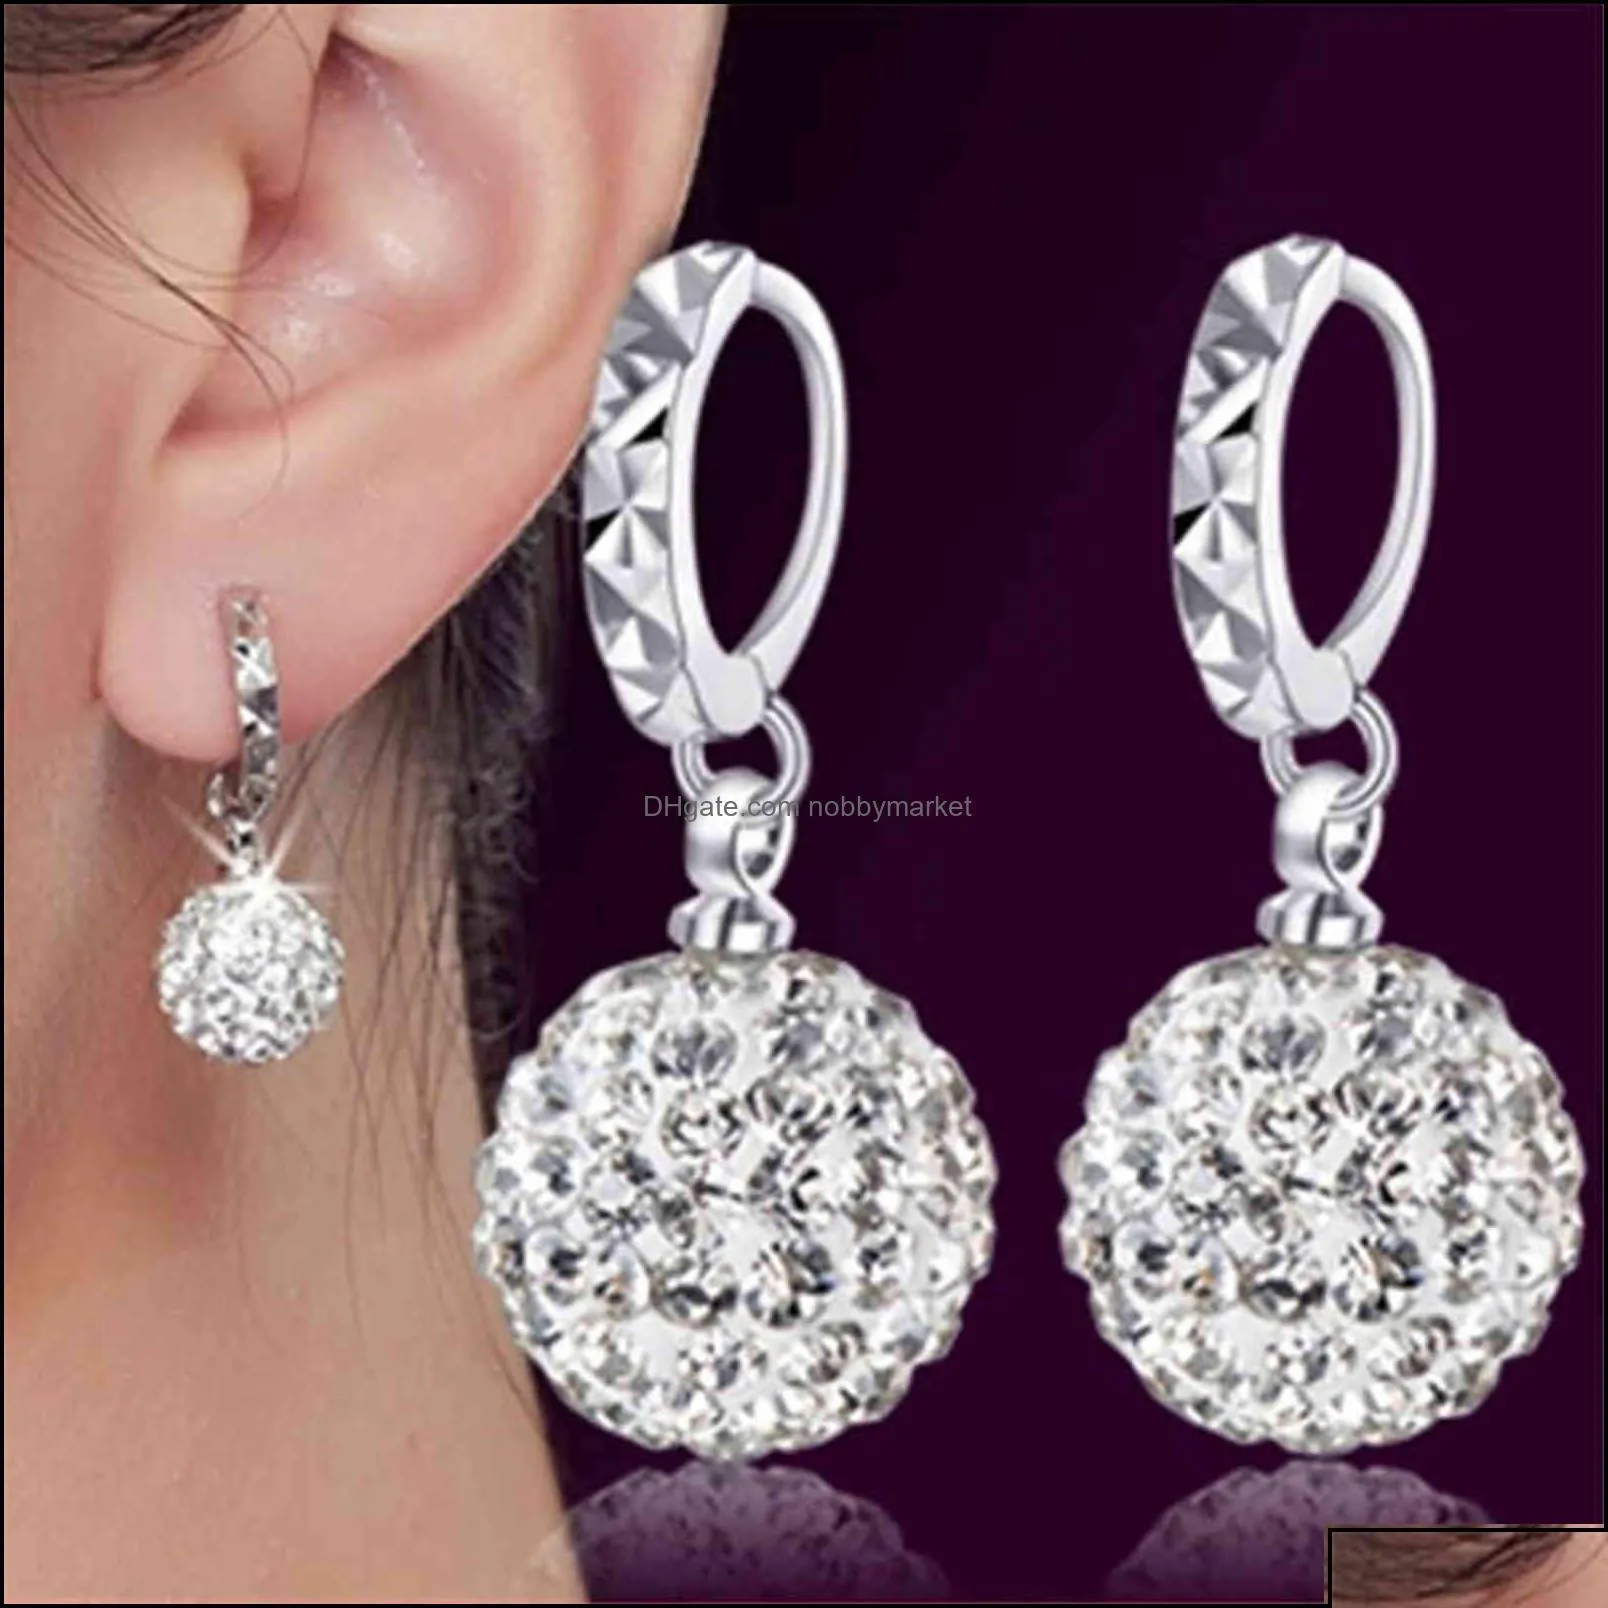 charm earrings jewelry nehzy 925 sterling sier shambhala luxury zirconia female original brand of highend vintage stud drop delivery 2021